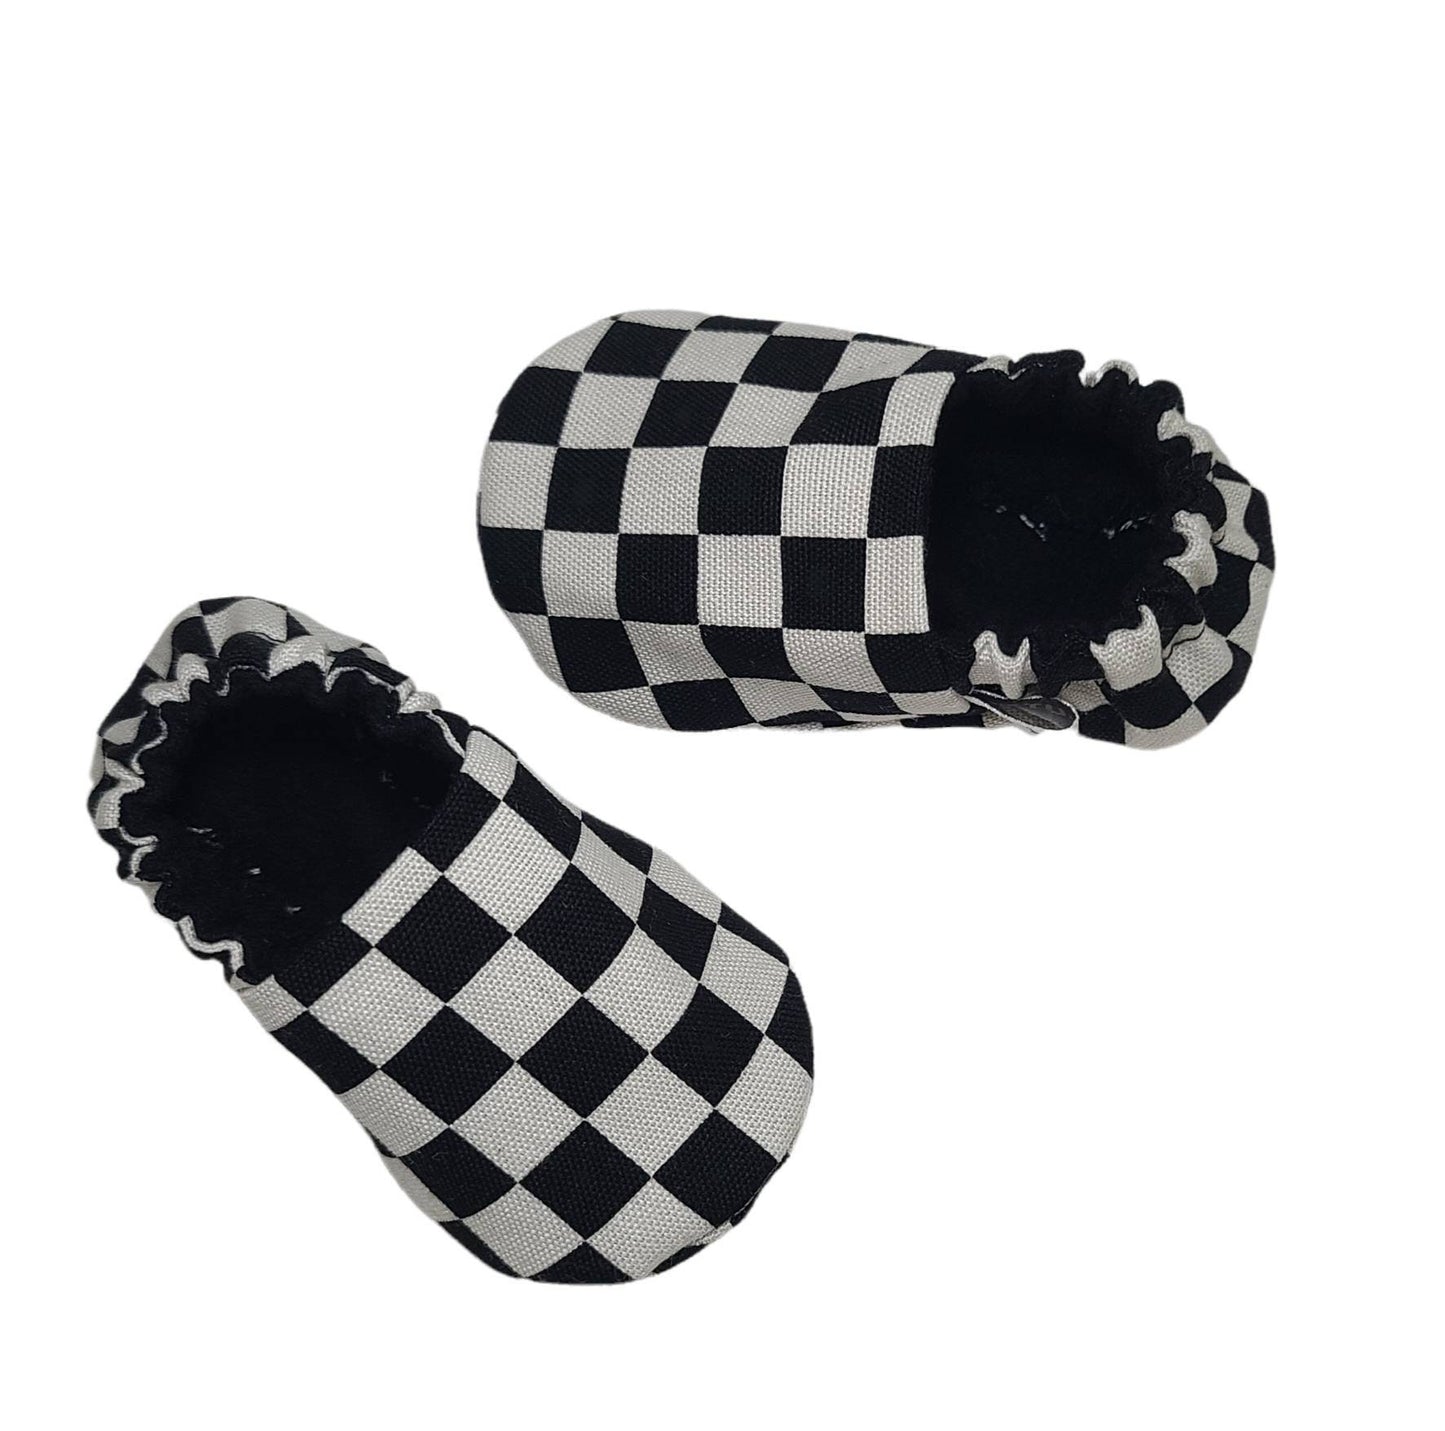 VANS, Baby Van Shoes, Kids Van Shoes, Checkerboard Shoes, Baby Gifts, Baby Crib Shoes, Black Baby Shoes, Checkered Baby Slippers